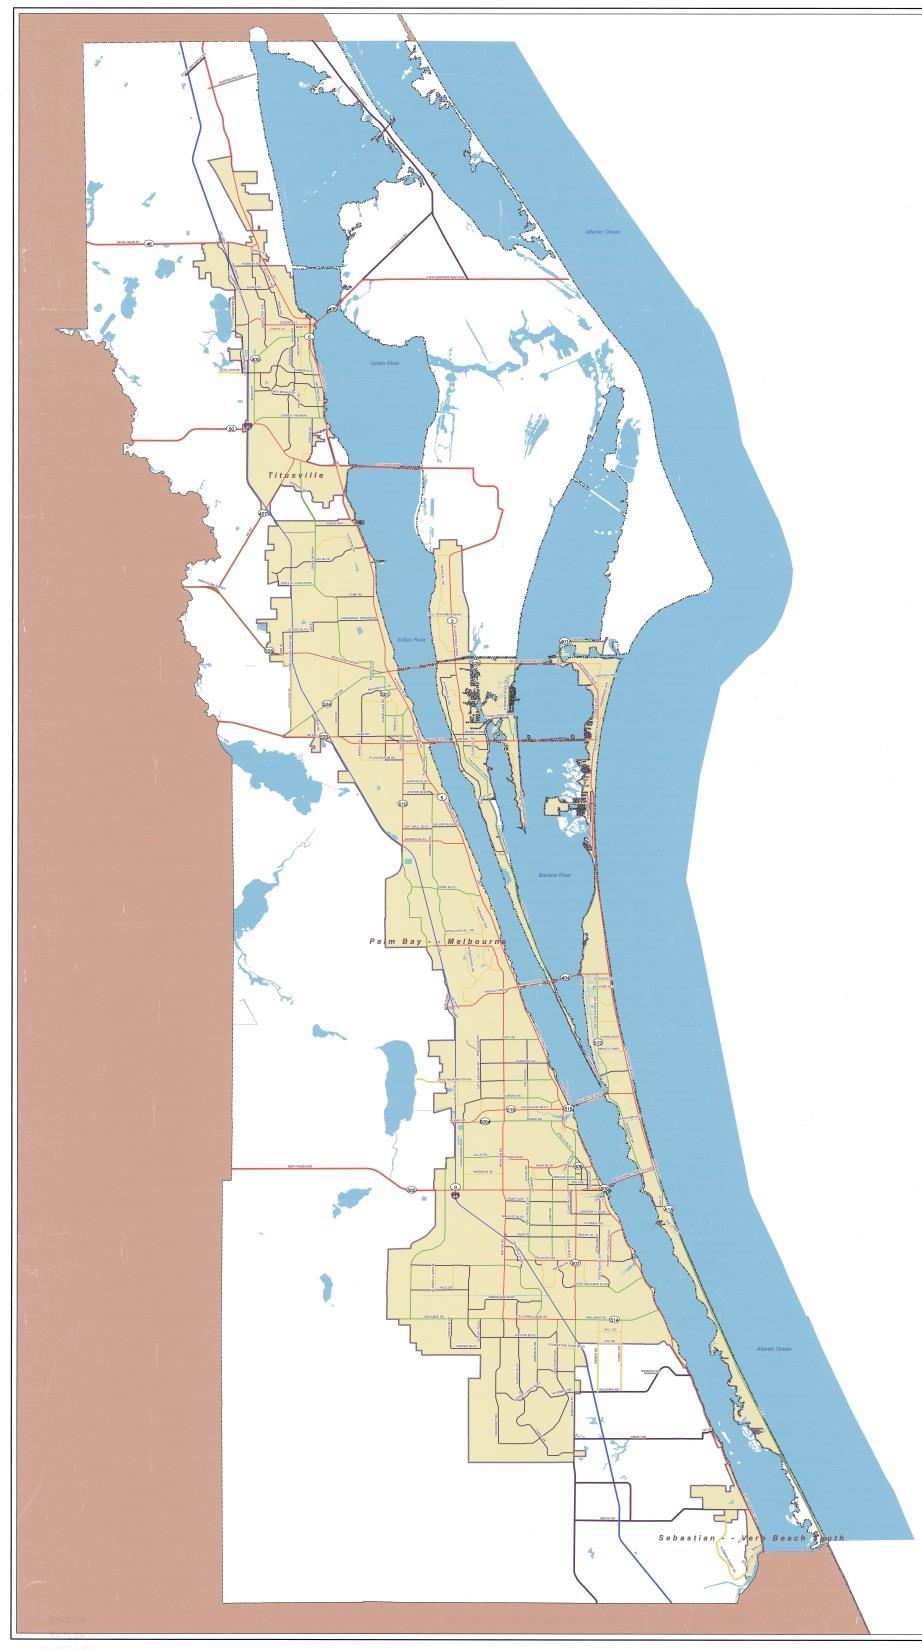 Space Coast Urbanized Area Boundaries Population 579,130 1 county 72 miles long 16